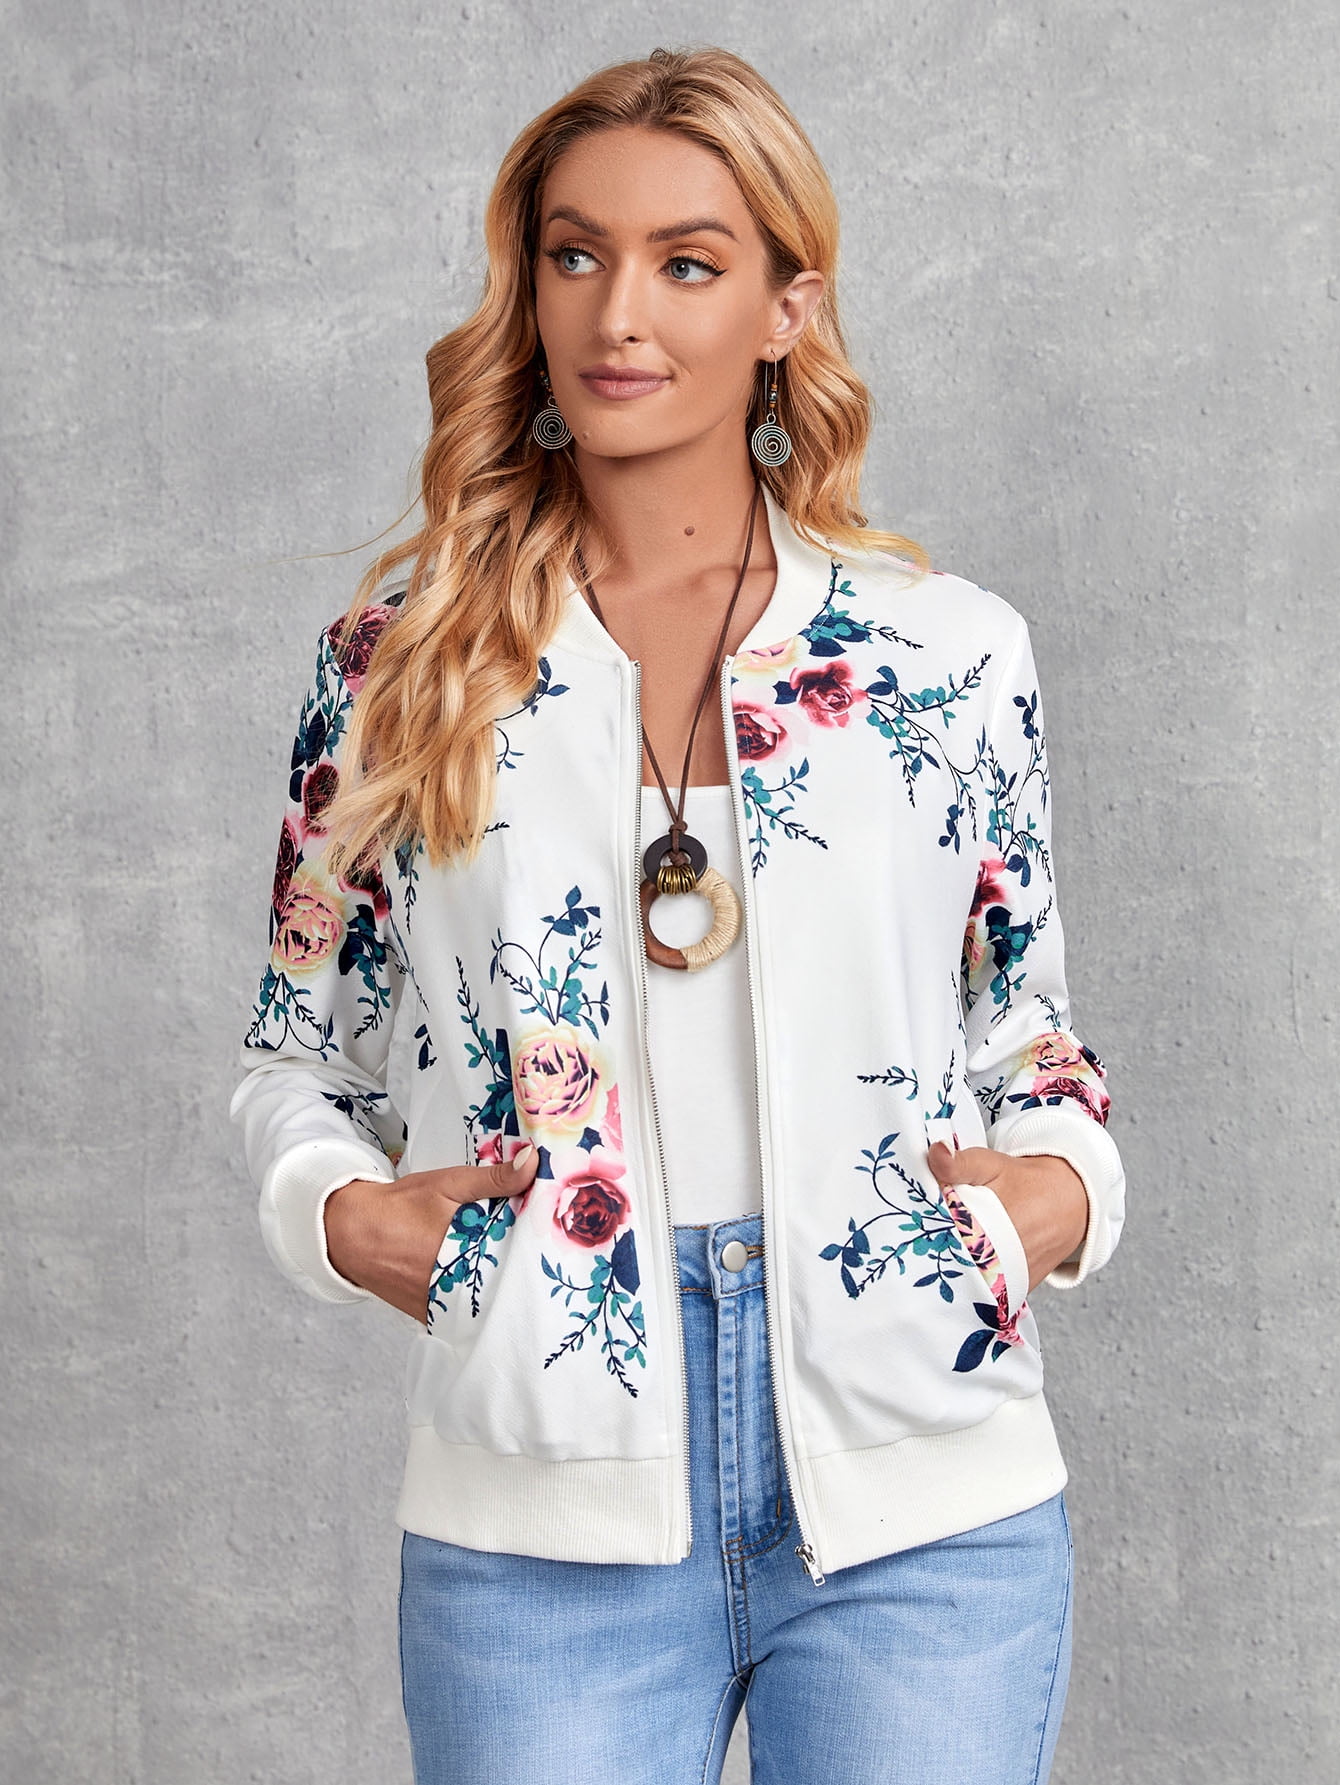 Mandy Women Fashion Floral Print Zipper Bomber Jacket Outwear Coat 